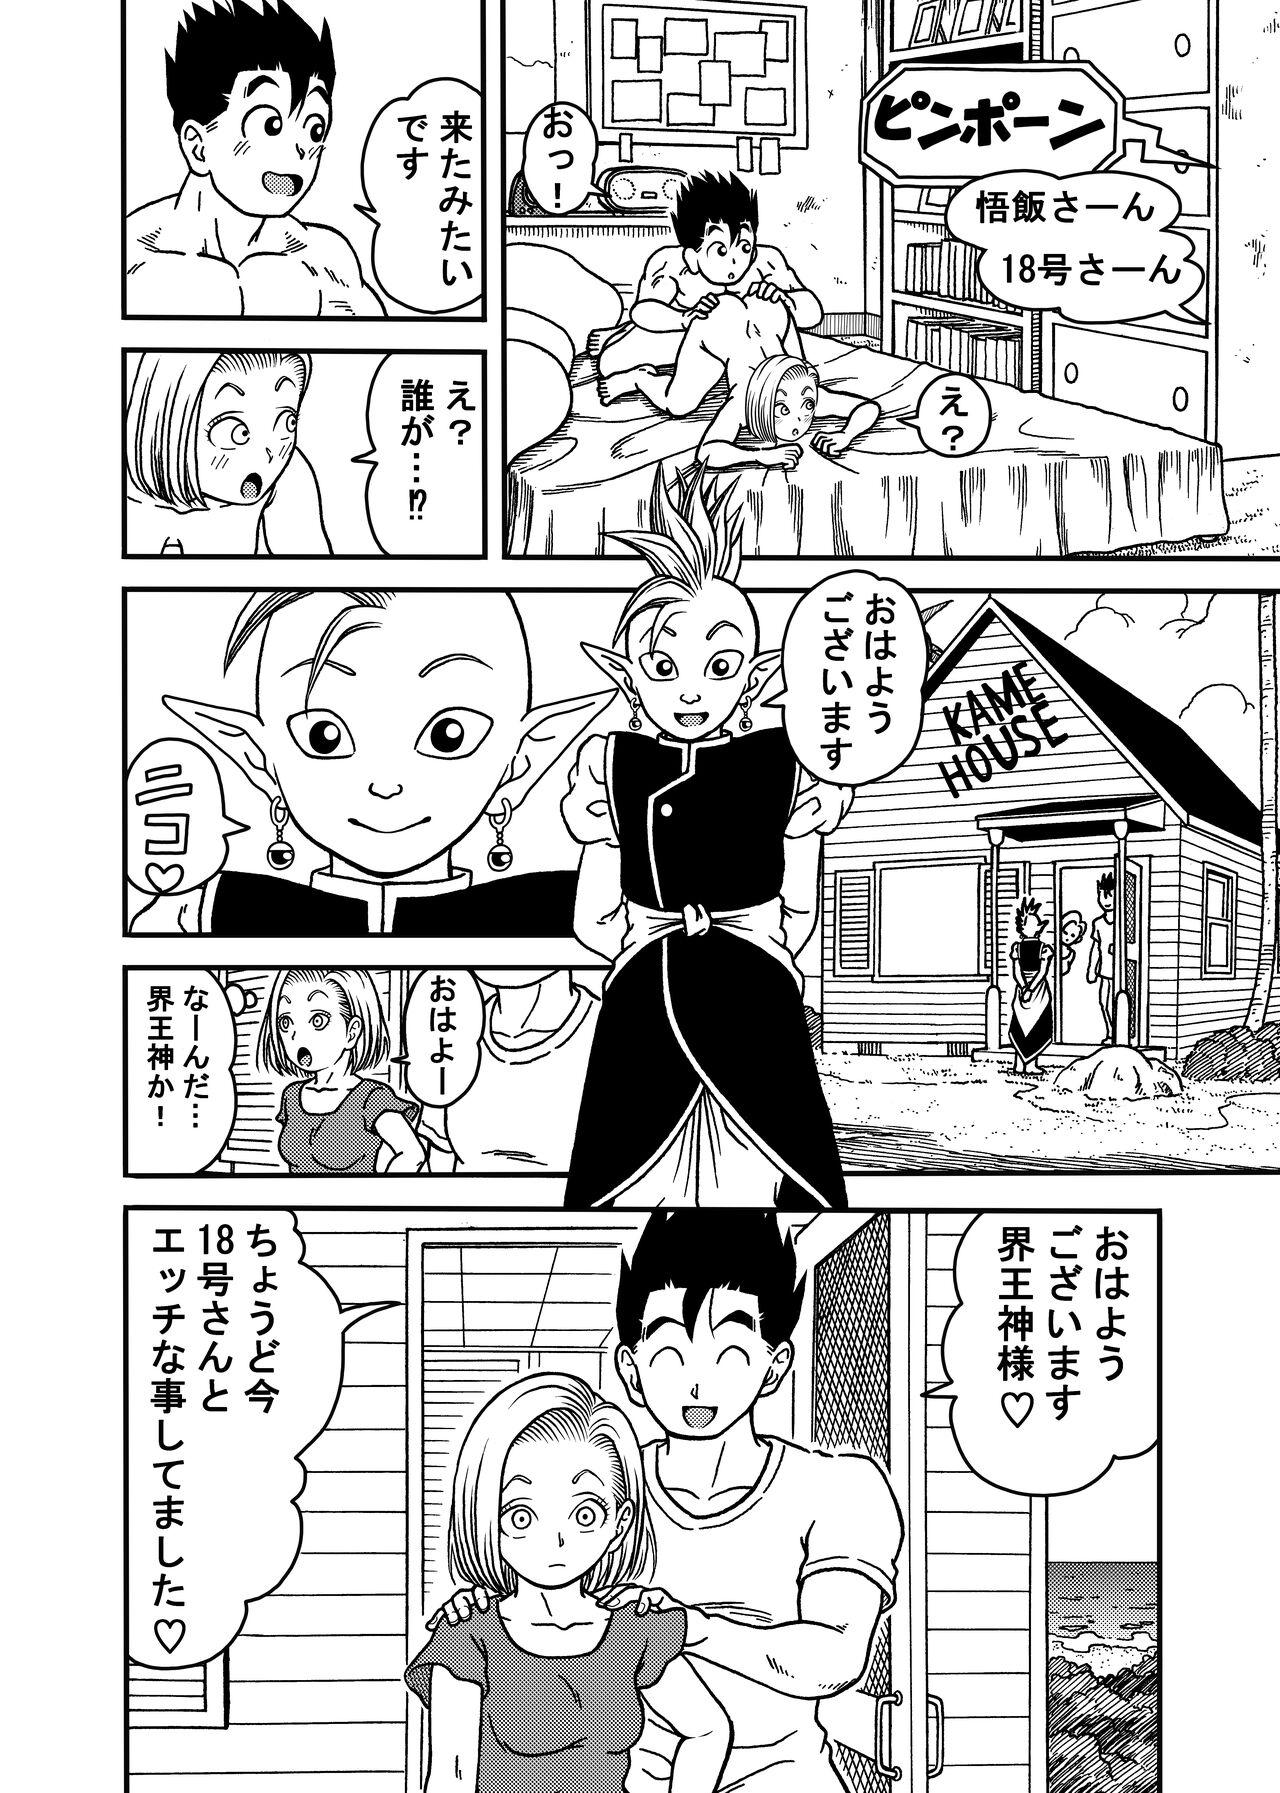 Jock 18-gou NTR Nakadashi on Parade 5 - Dragon ball z This - Page 8